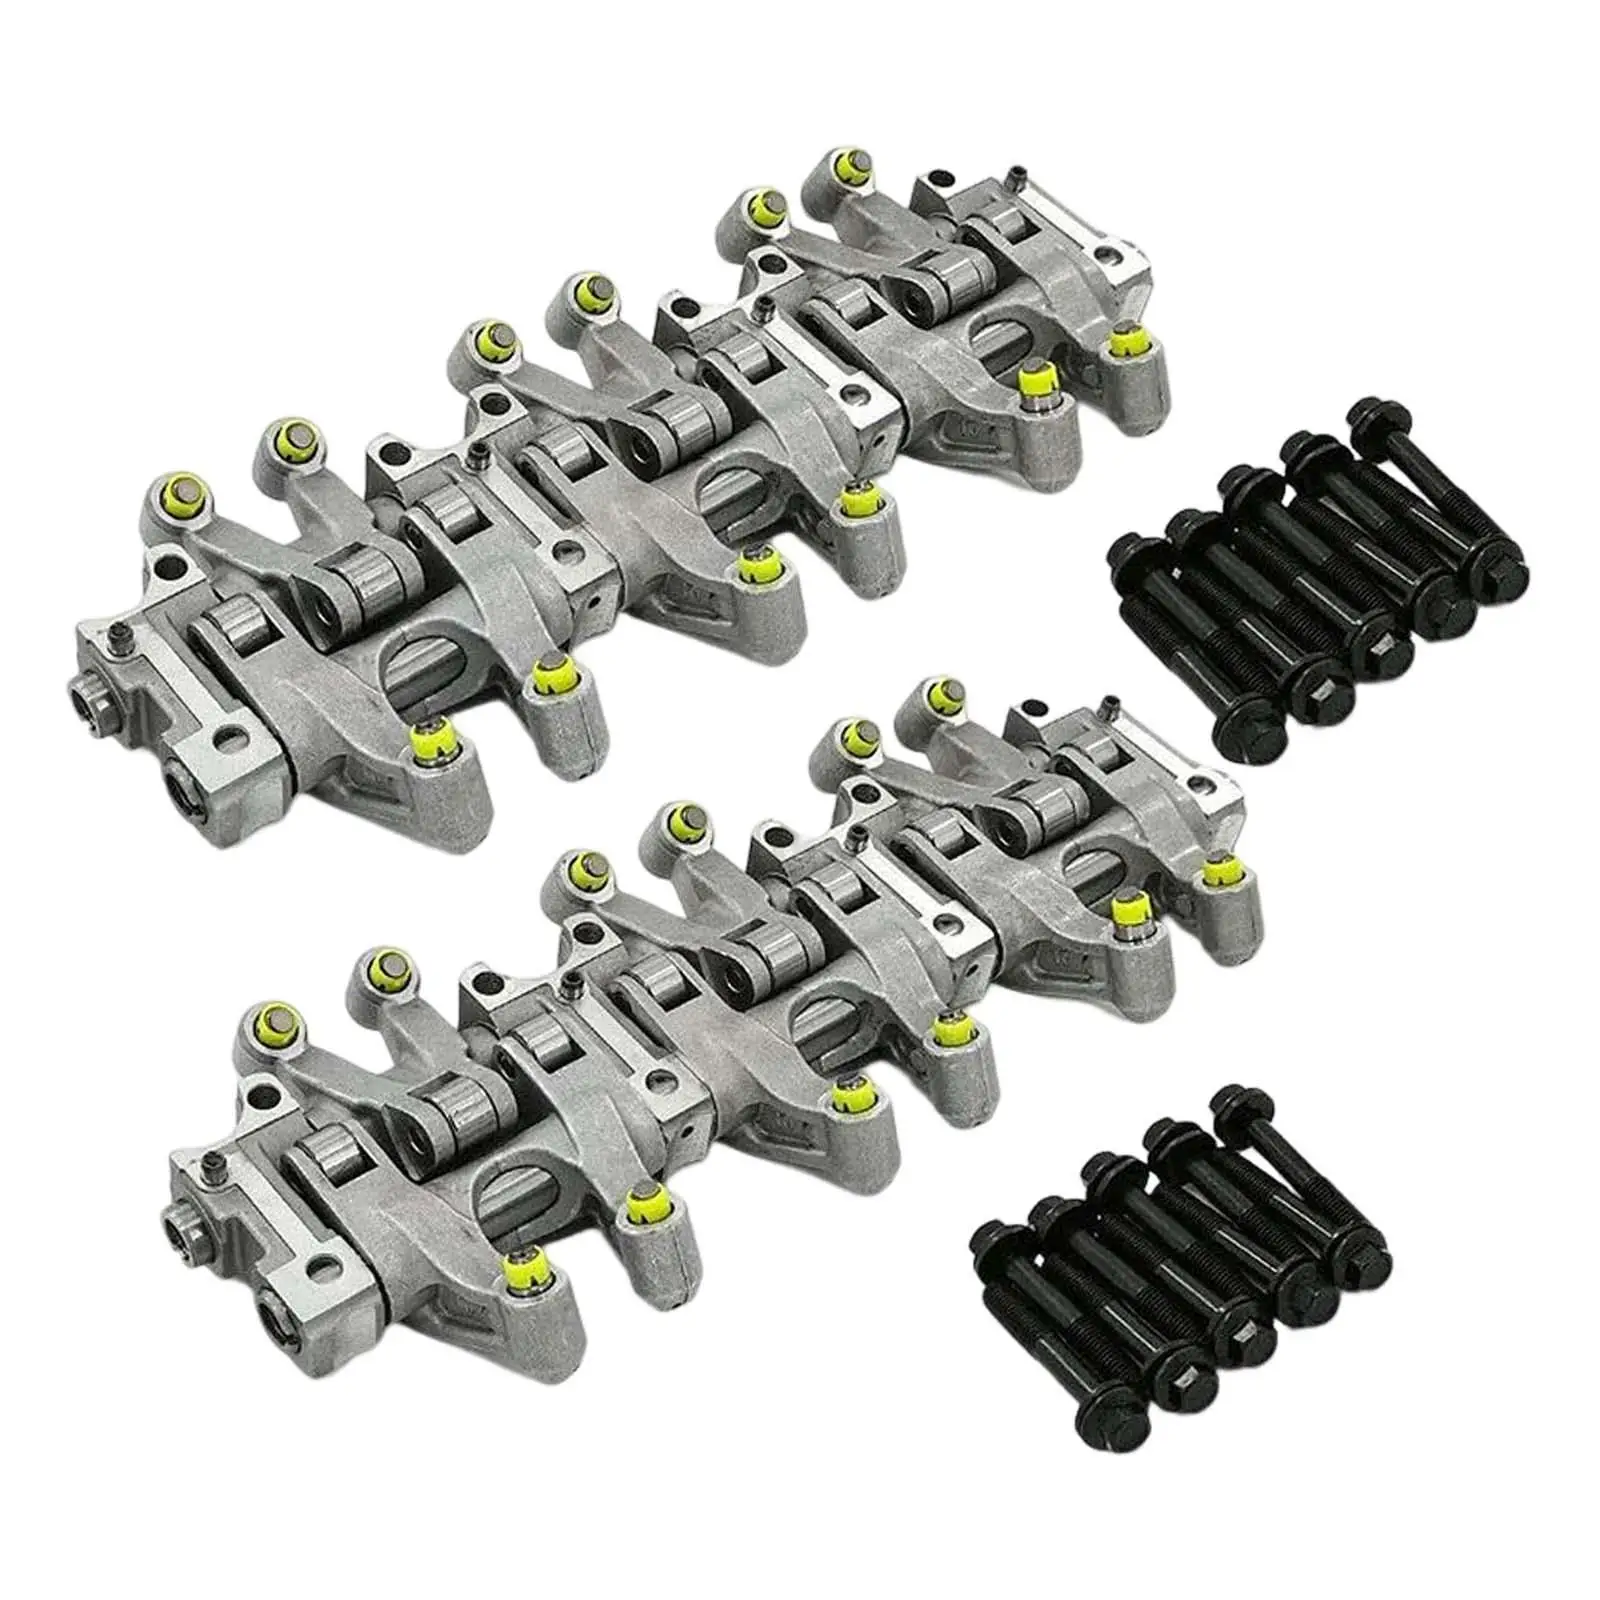 2 Pieces Rocker Arm Shaft Lifter Assembly 4892293Ab 4892293AC Size 41x17x5cm Convenient Installation